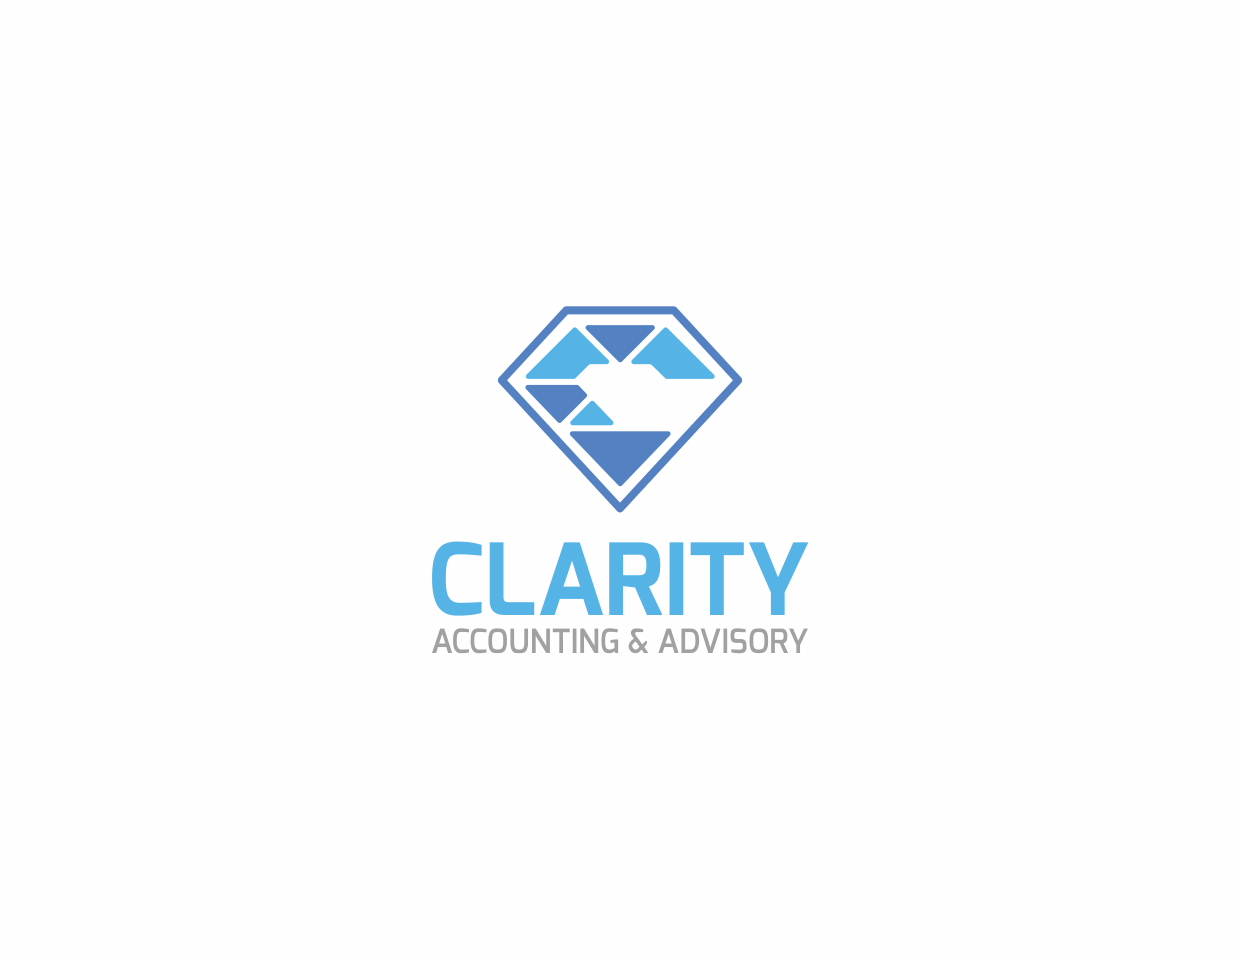 Diamond-Shaped Company Logo - Elegant, Modern, Accounting Logo Design for Diamond shape or other ...